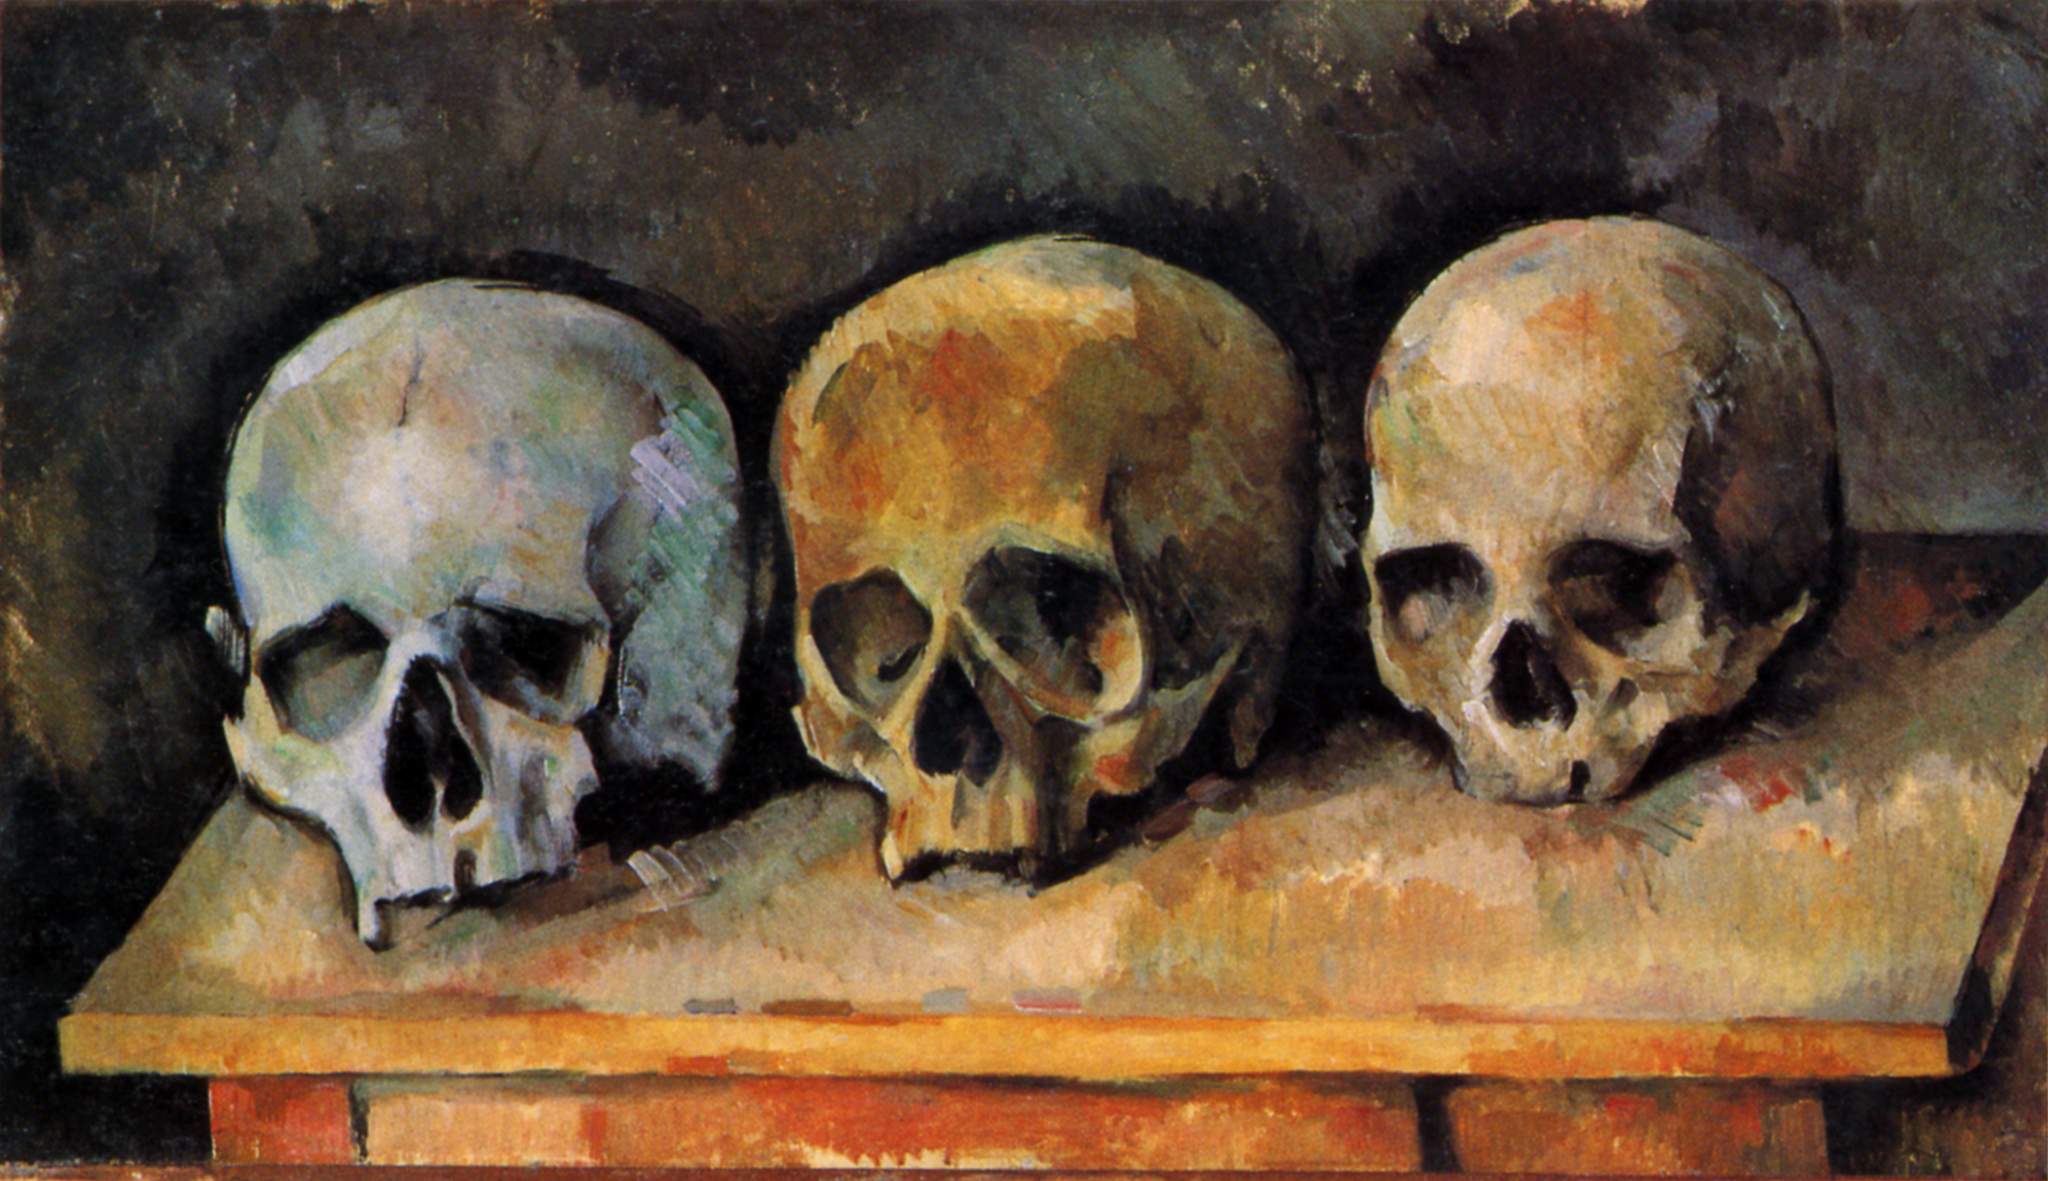 The Three Skulls by Paul Cézanne - c. 1900 - 34.9 x 61 cm Detroit Institute of Arts